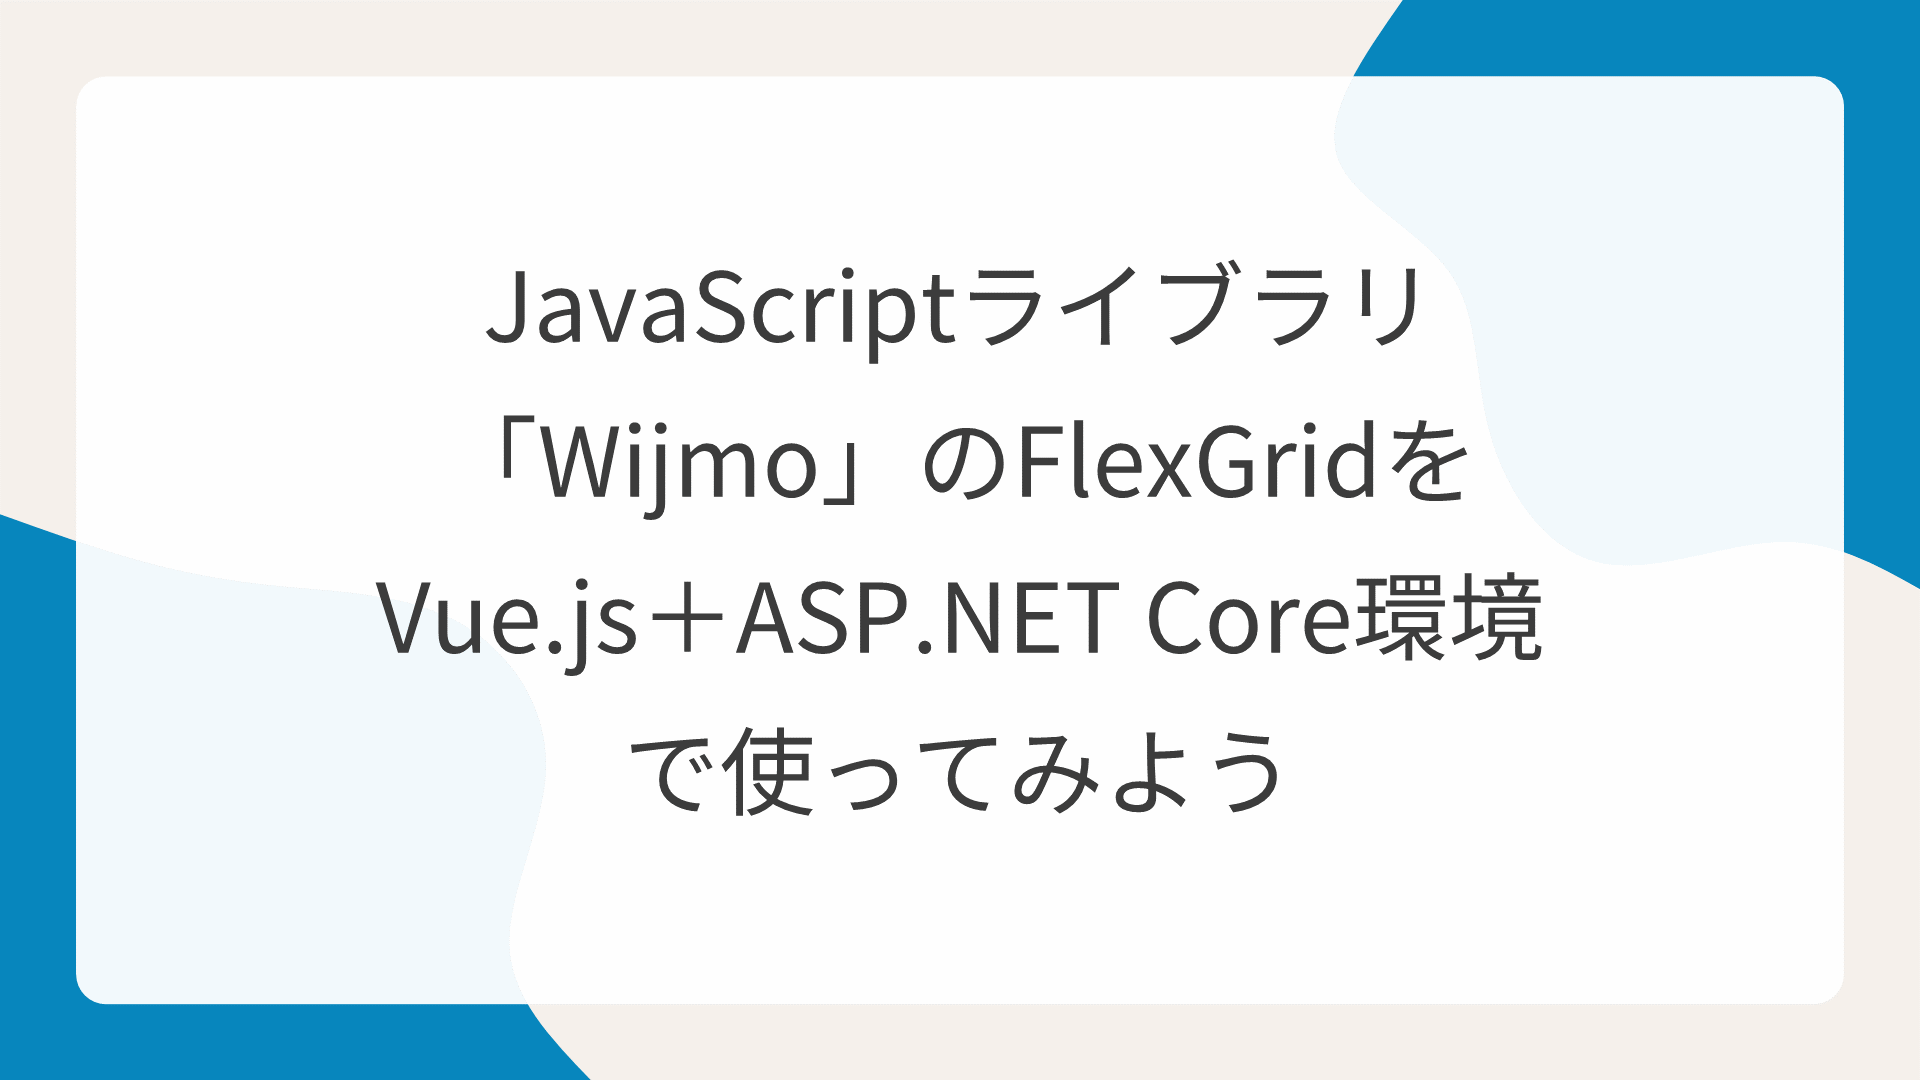 JavaScriptライブラリ「Wijmo」のFlexGridをVue.js＋ASP.NET Core環境で使ってみよう